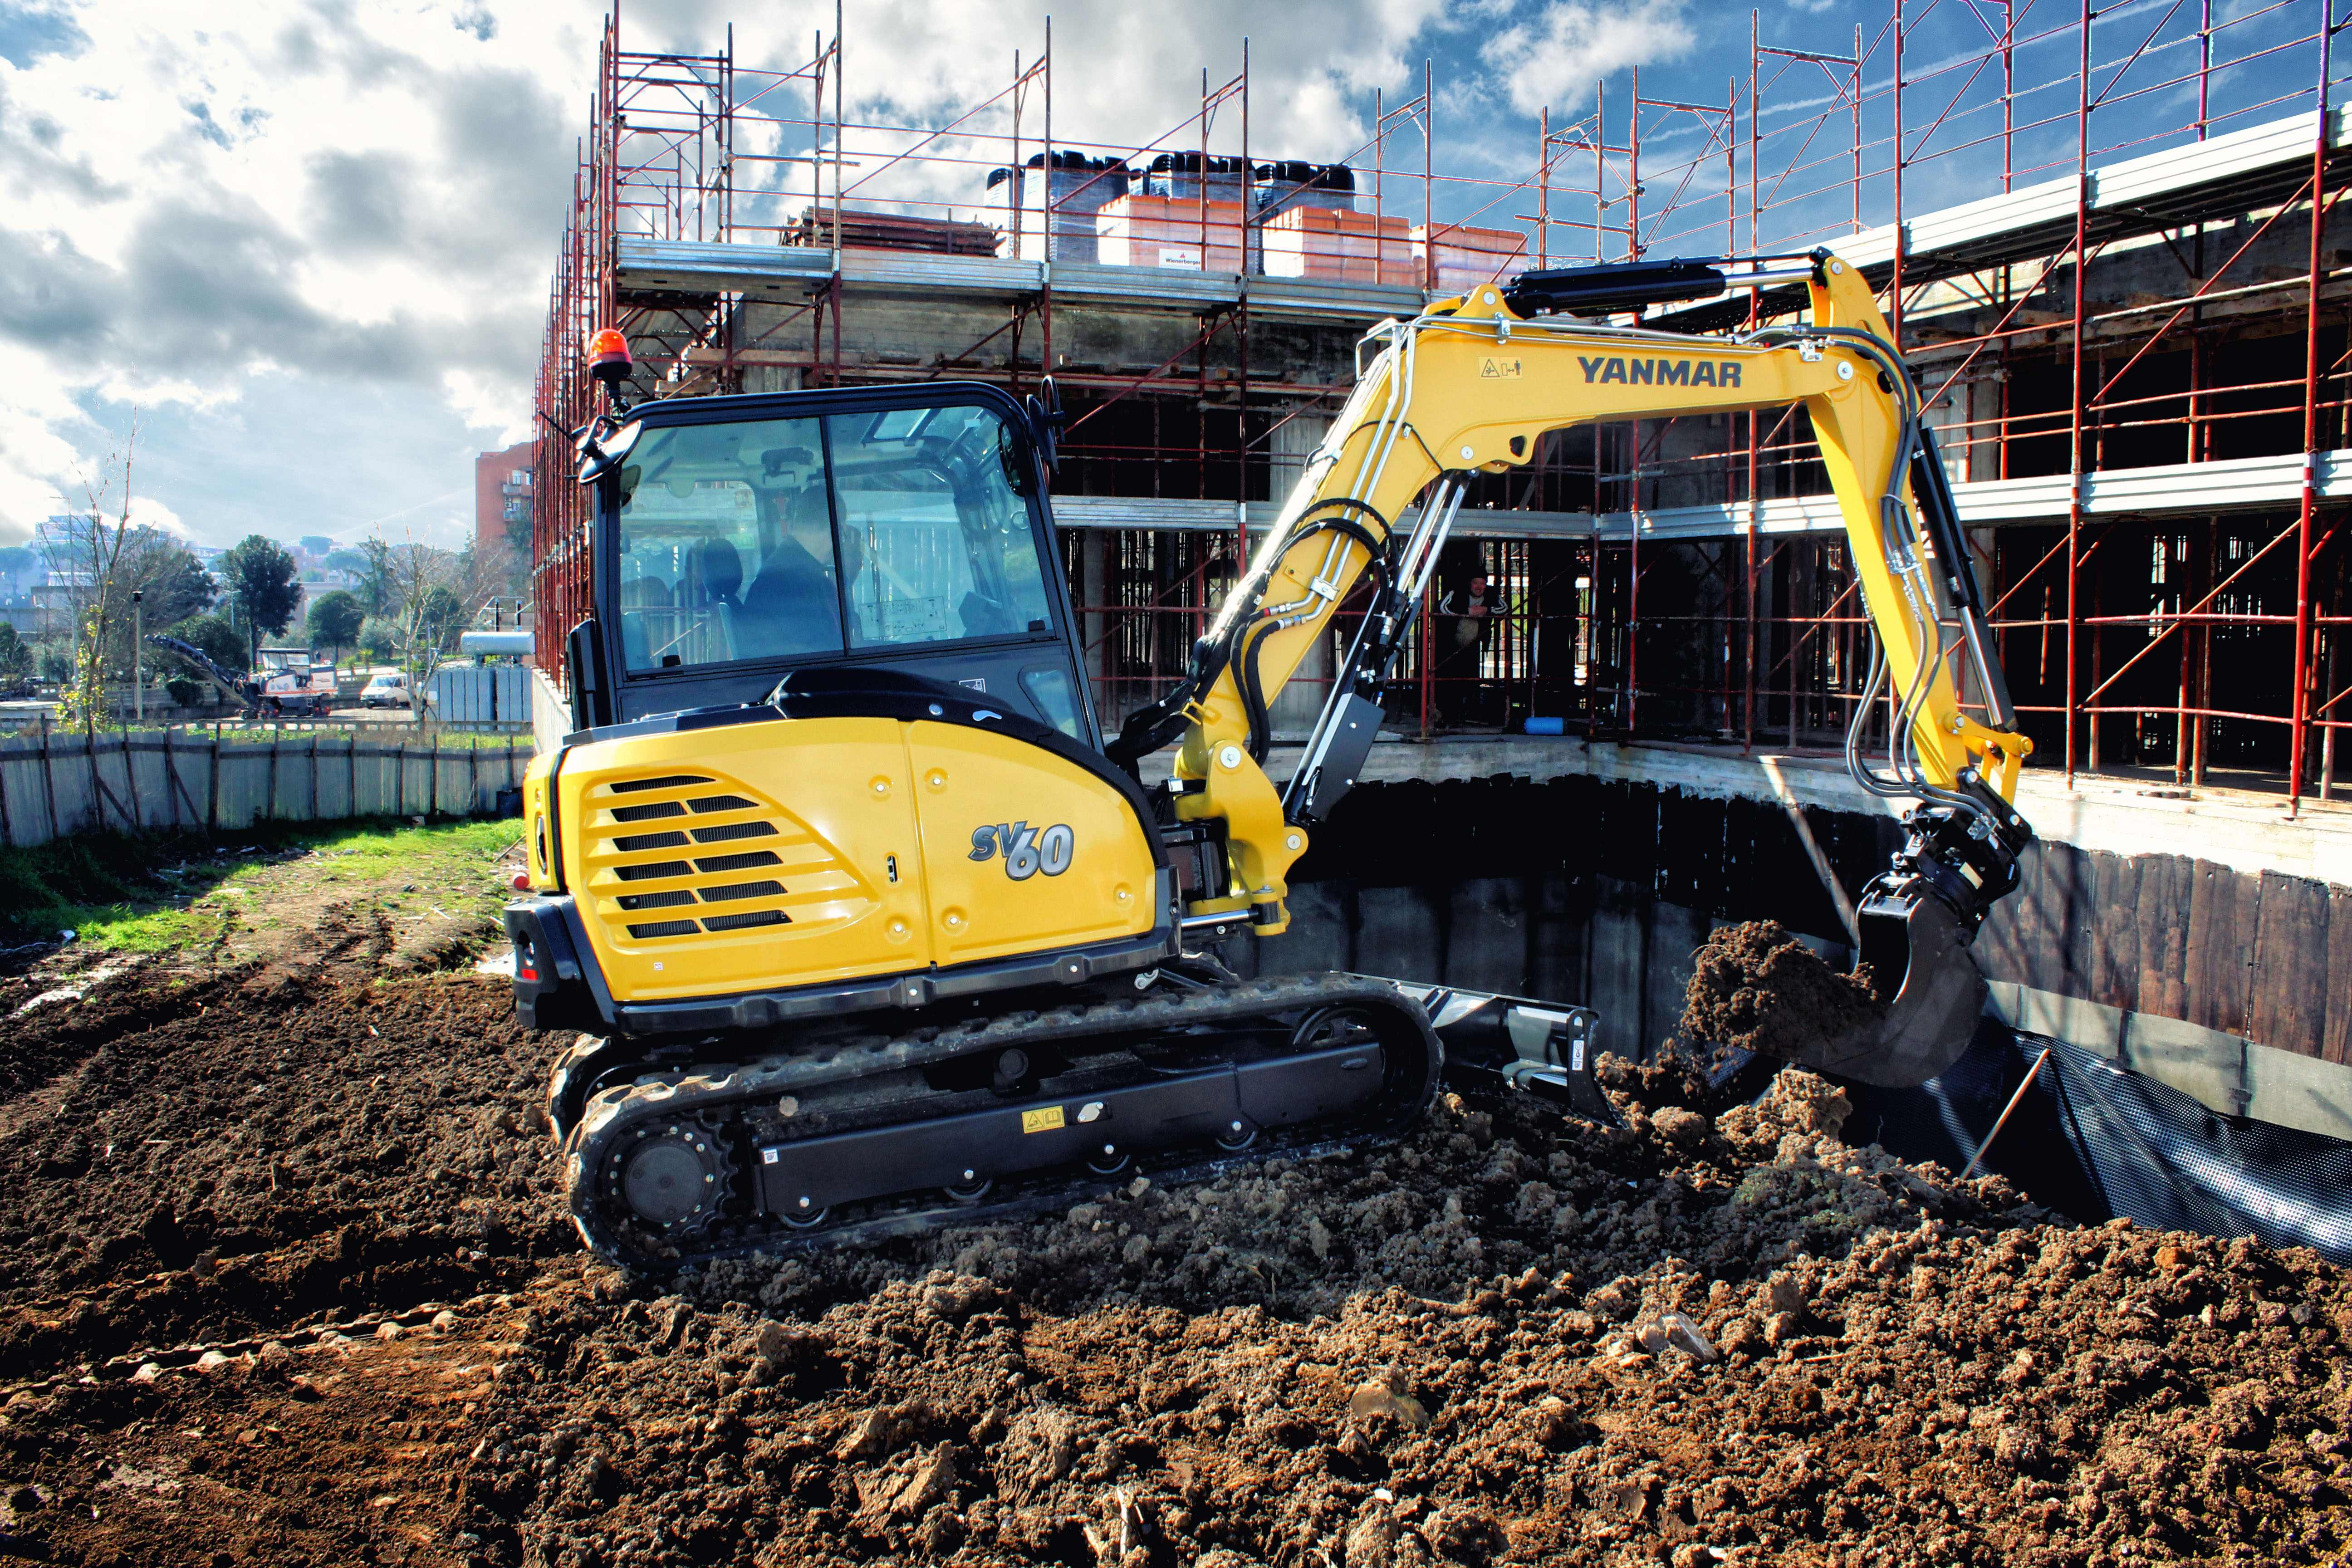 Yanmar CEE launches all-new SV60 midi-excavator